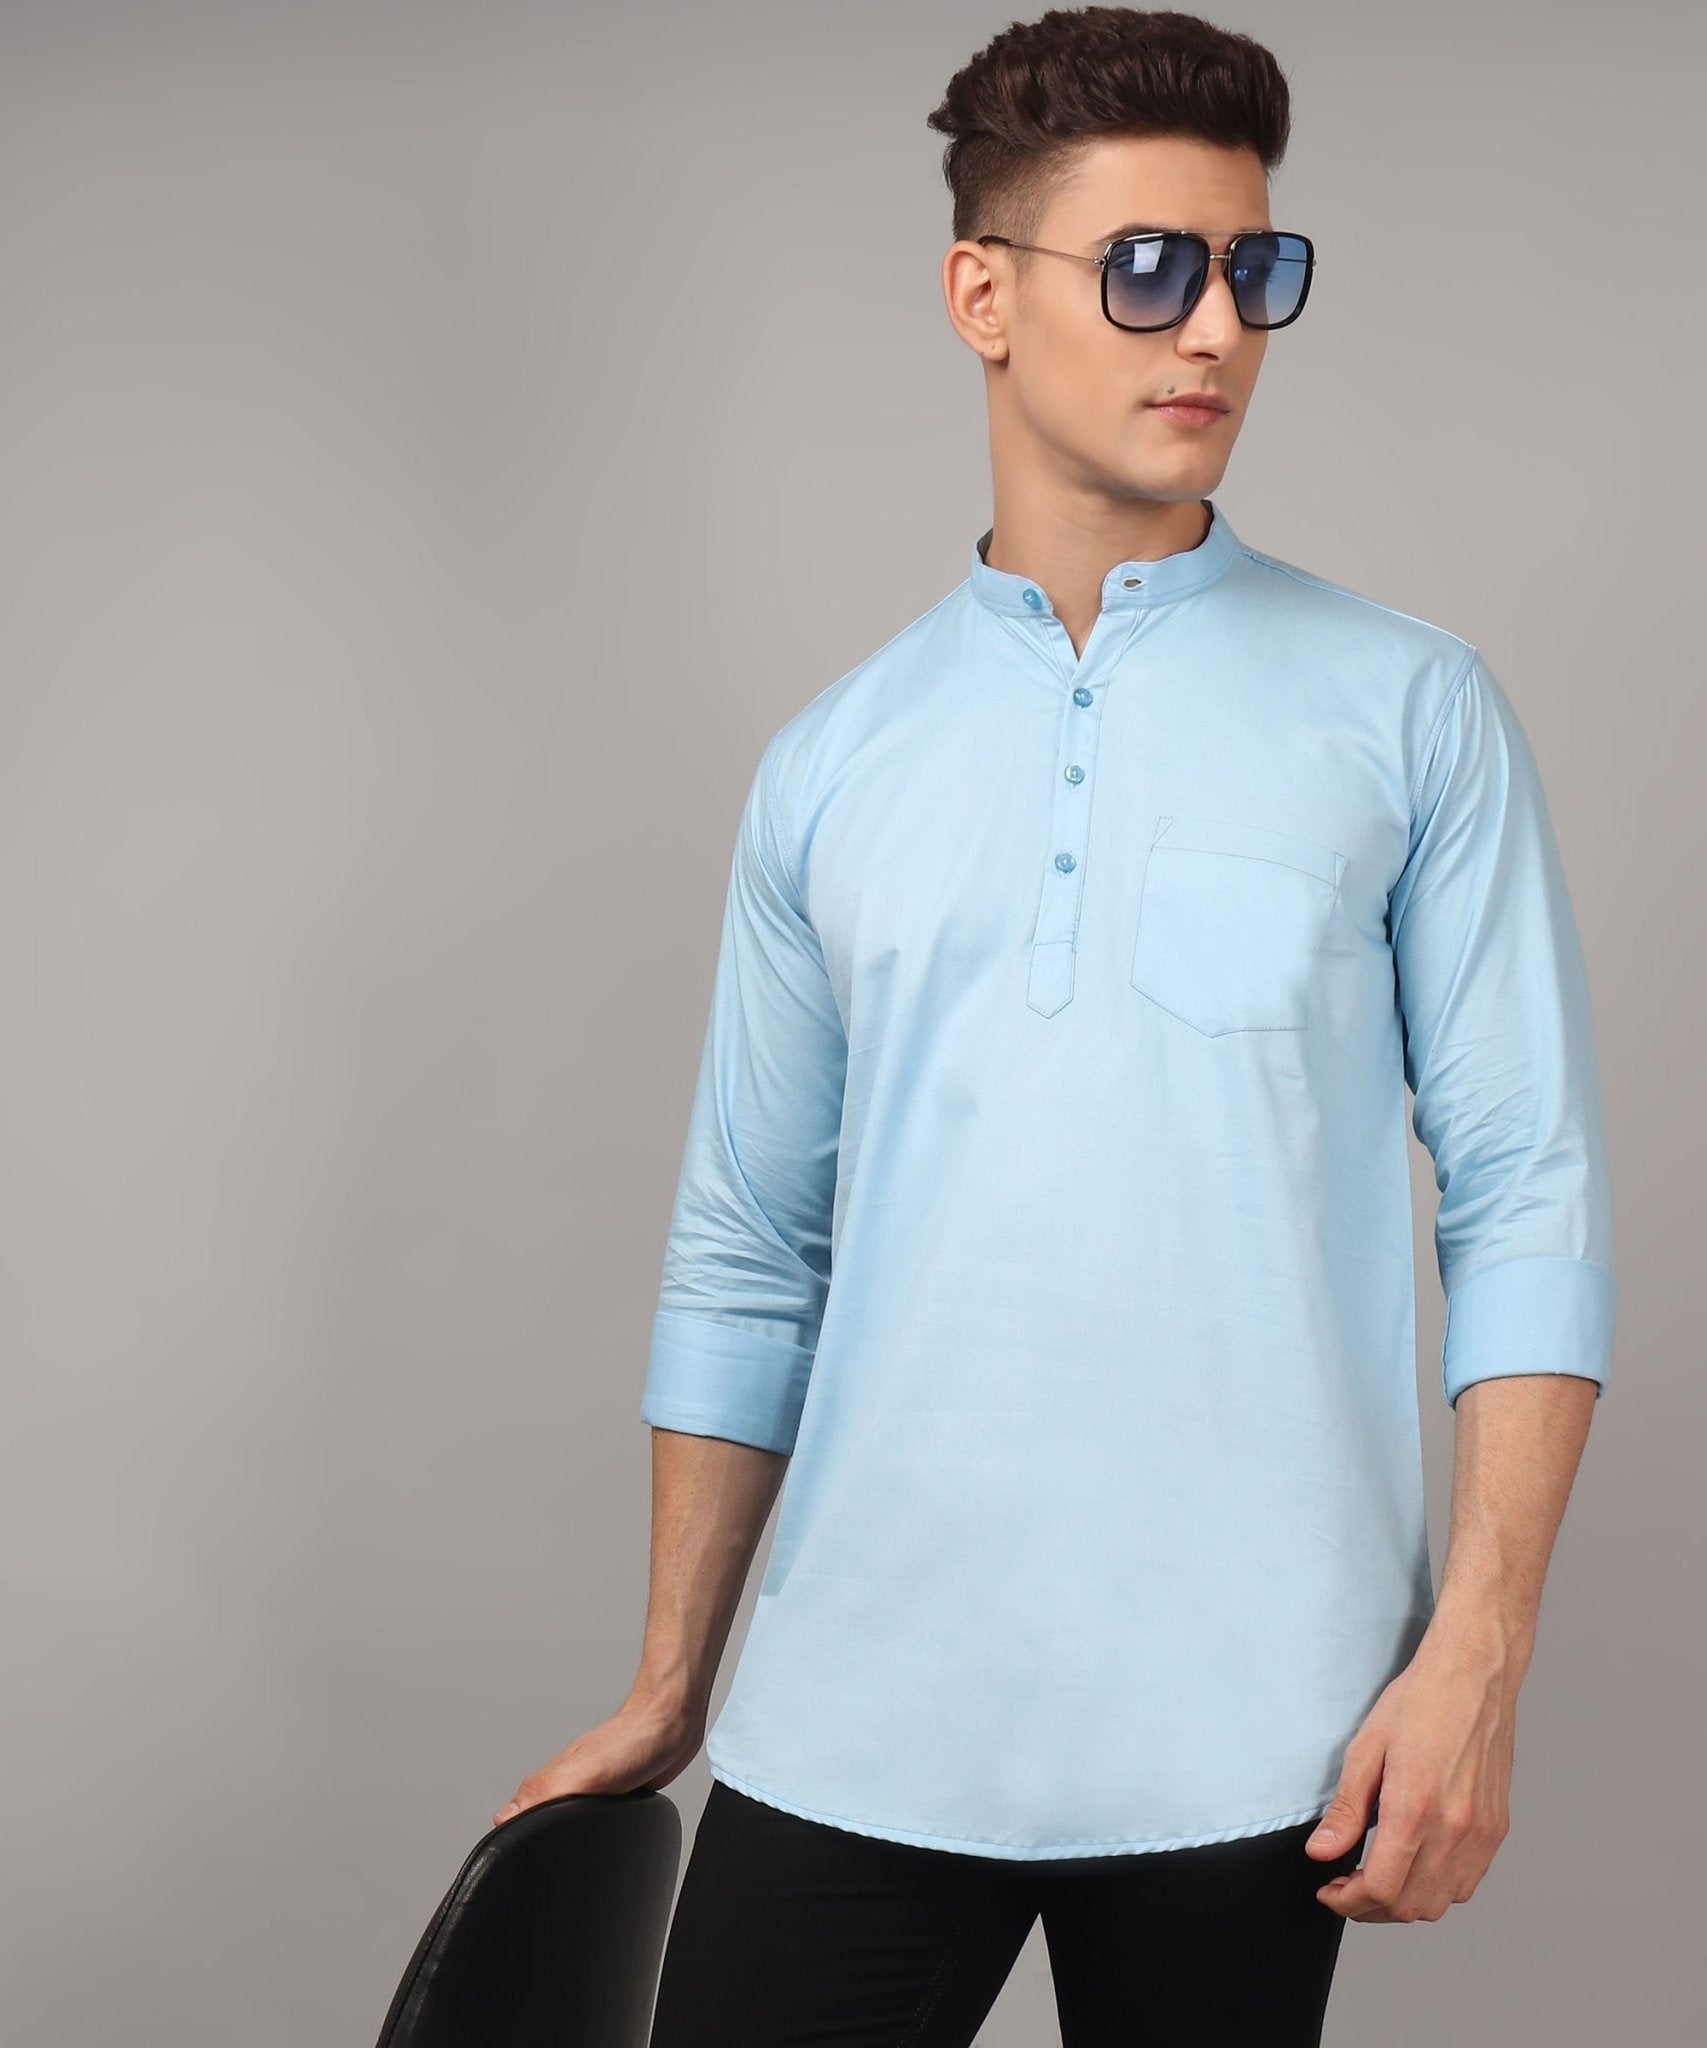 TryBuy Premium Cotton Made Trendy Ethnic Sky Blue Kurta for Men - TryBuy® USA🇺🇸